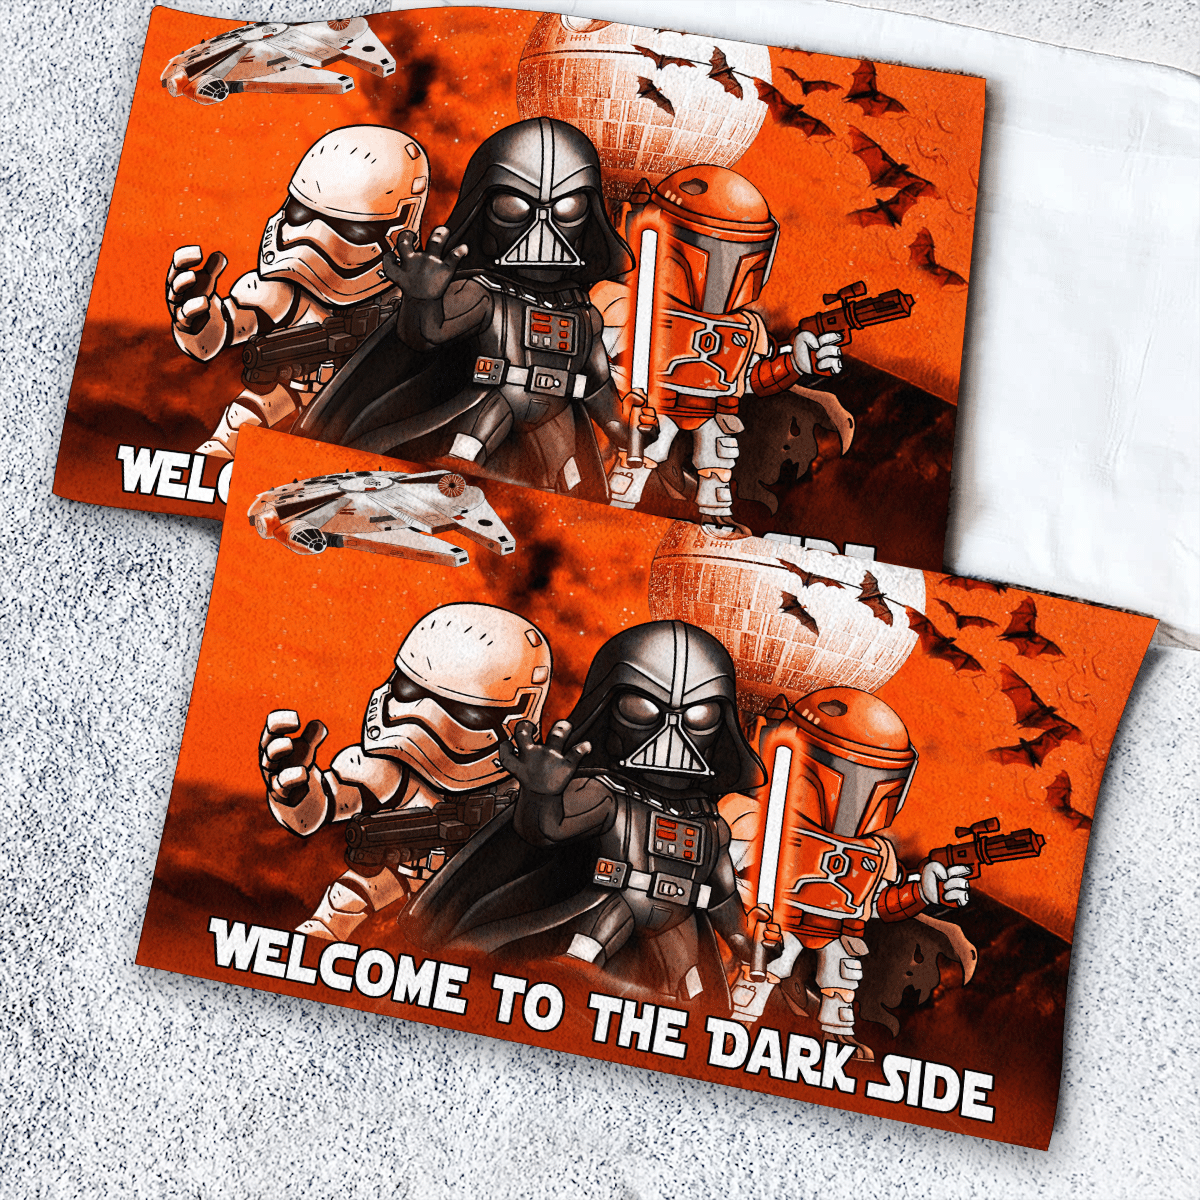 Star Wars Darth Vader Stormtrooper Boba Fett Welcome to the dark side doormat 13